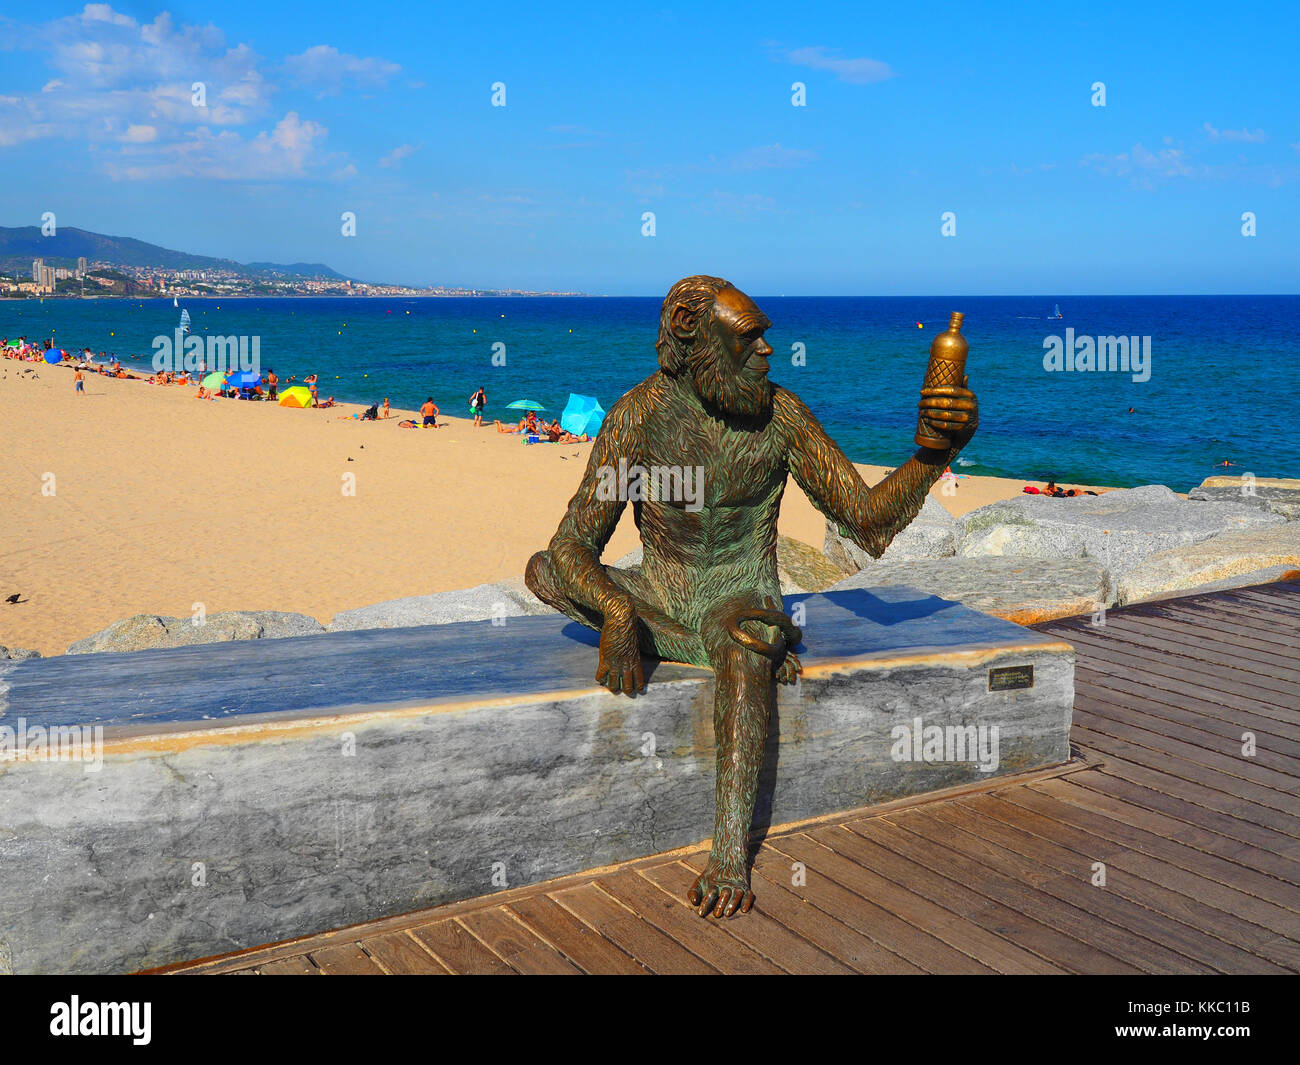 Monkey Sculpture in Badalona, Spain Stock Photo